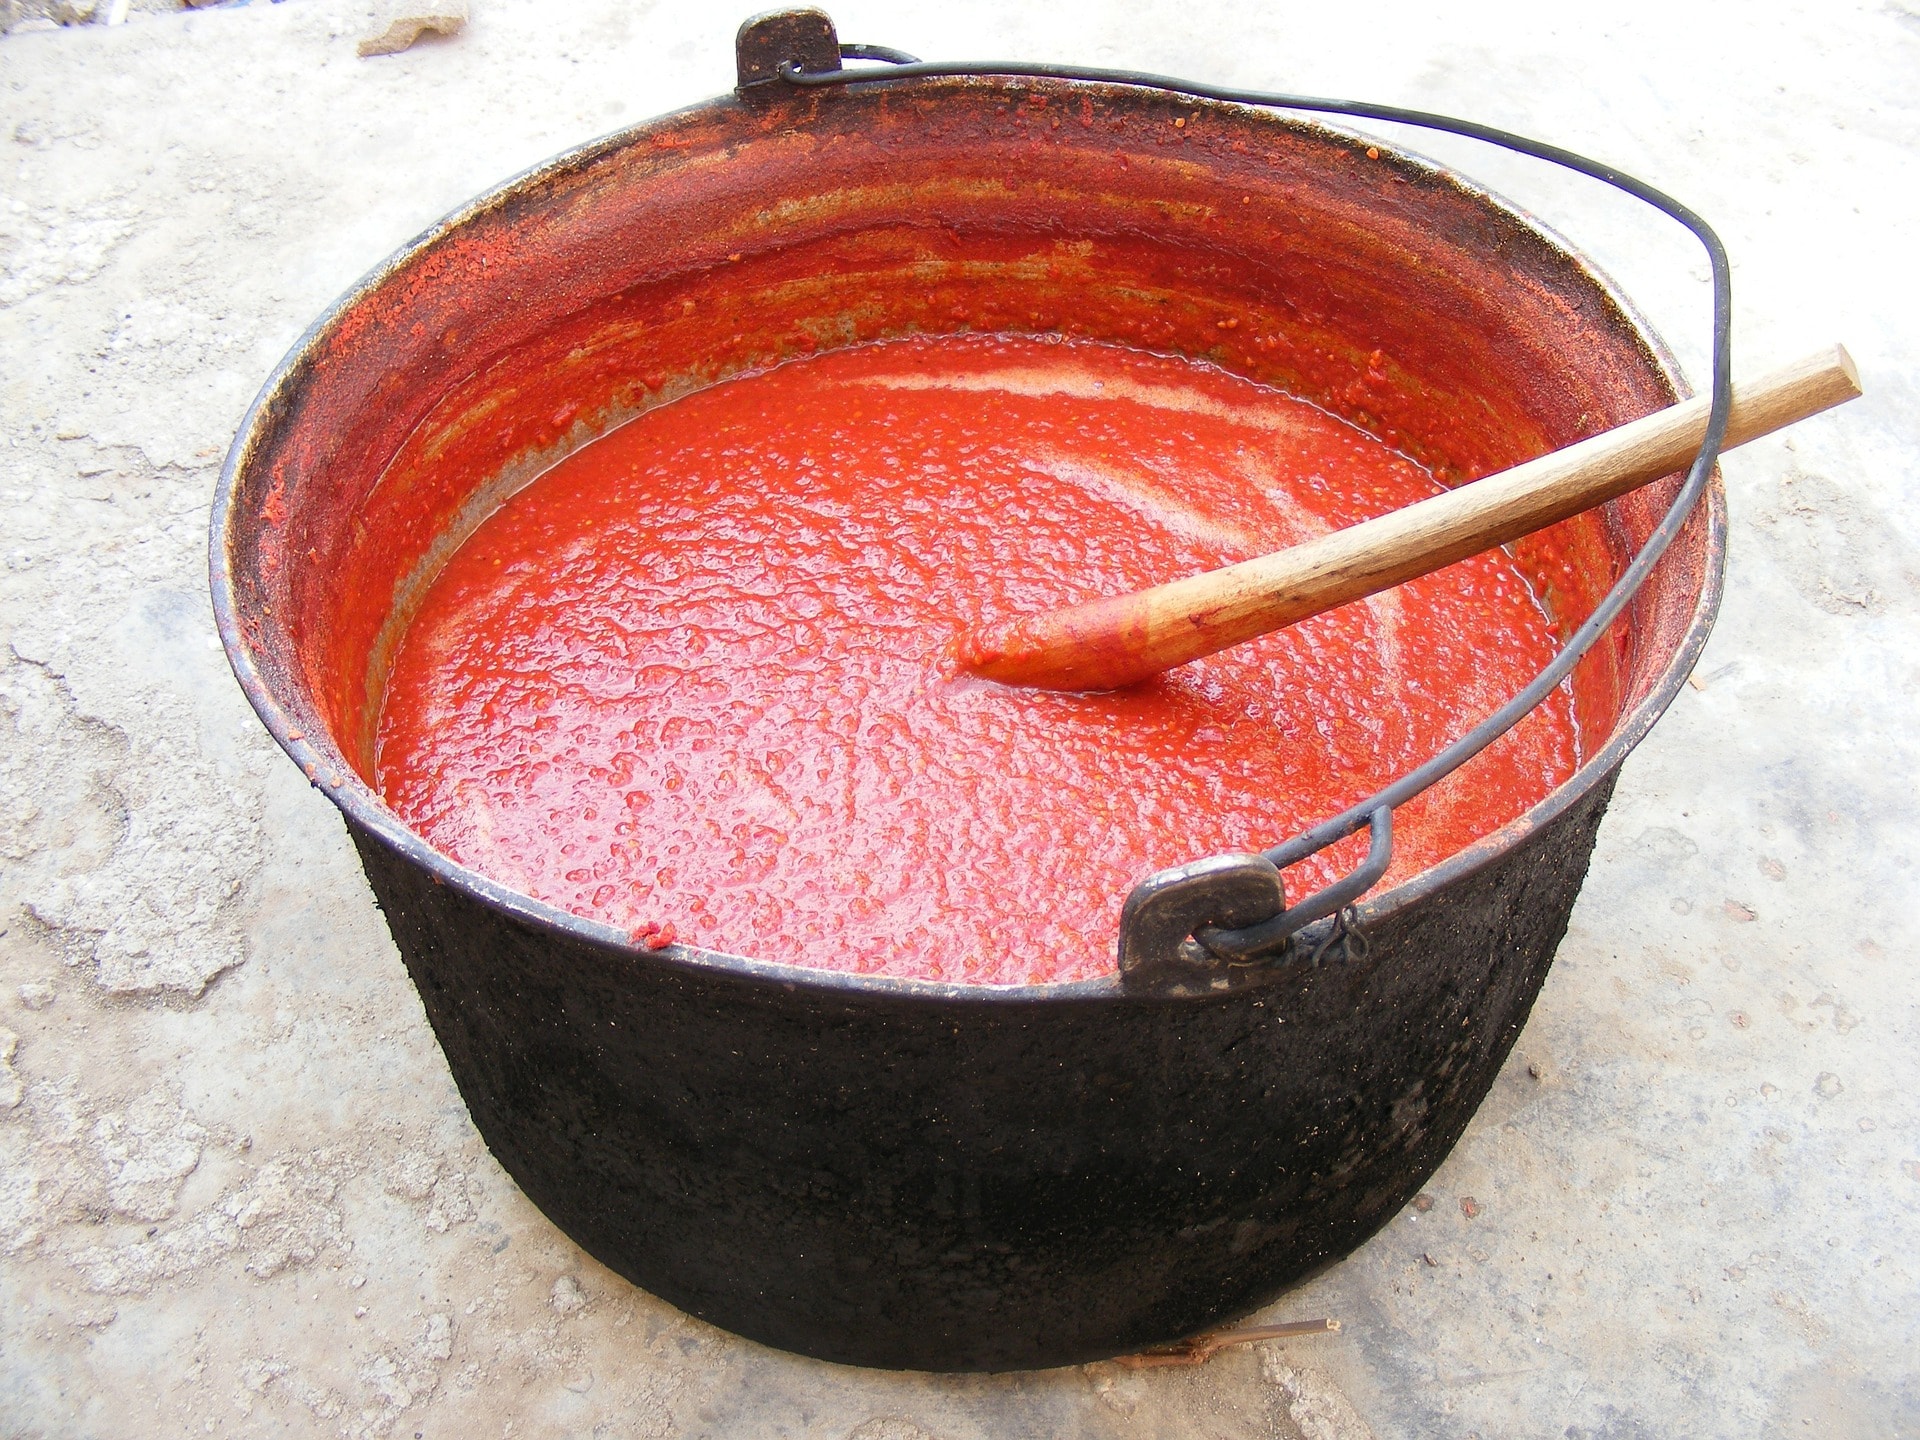 Tomato marinara sauce